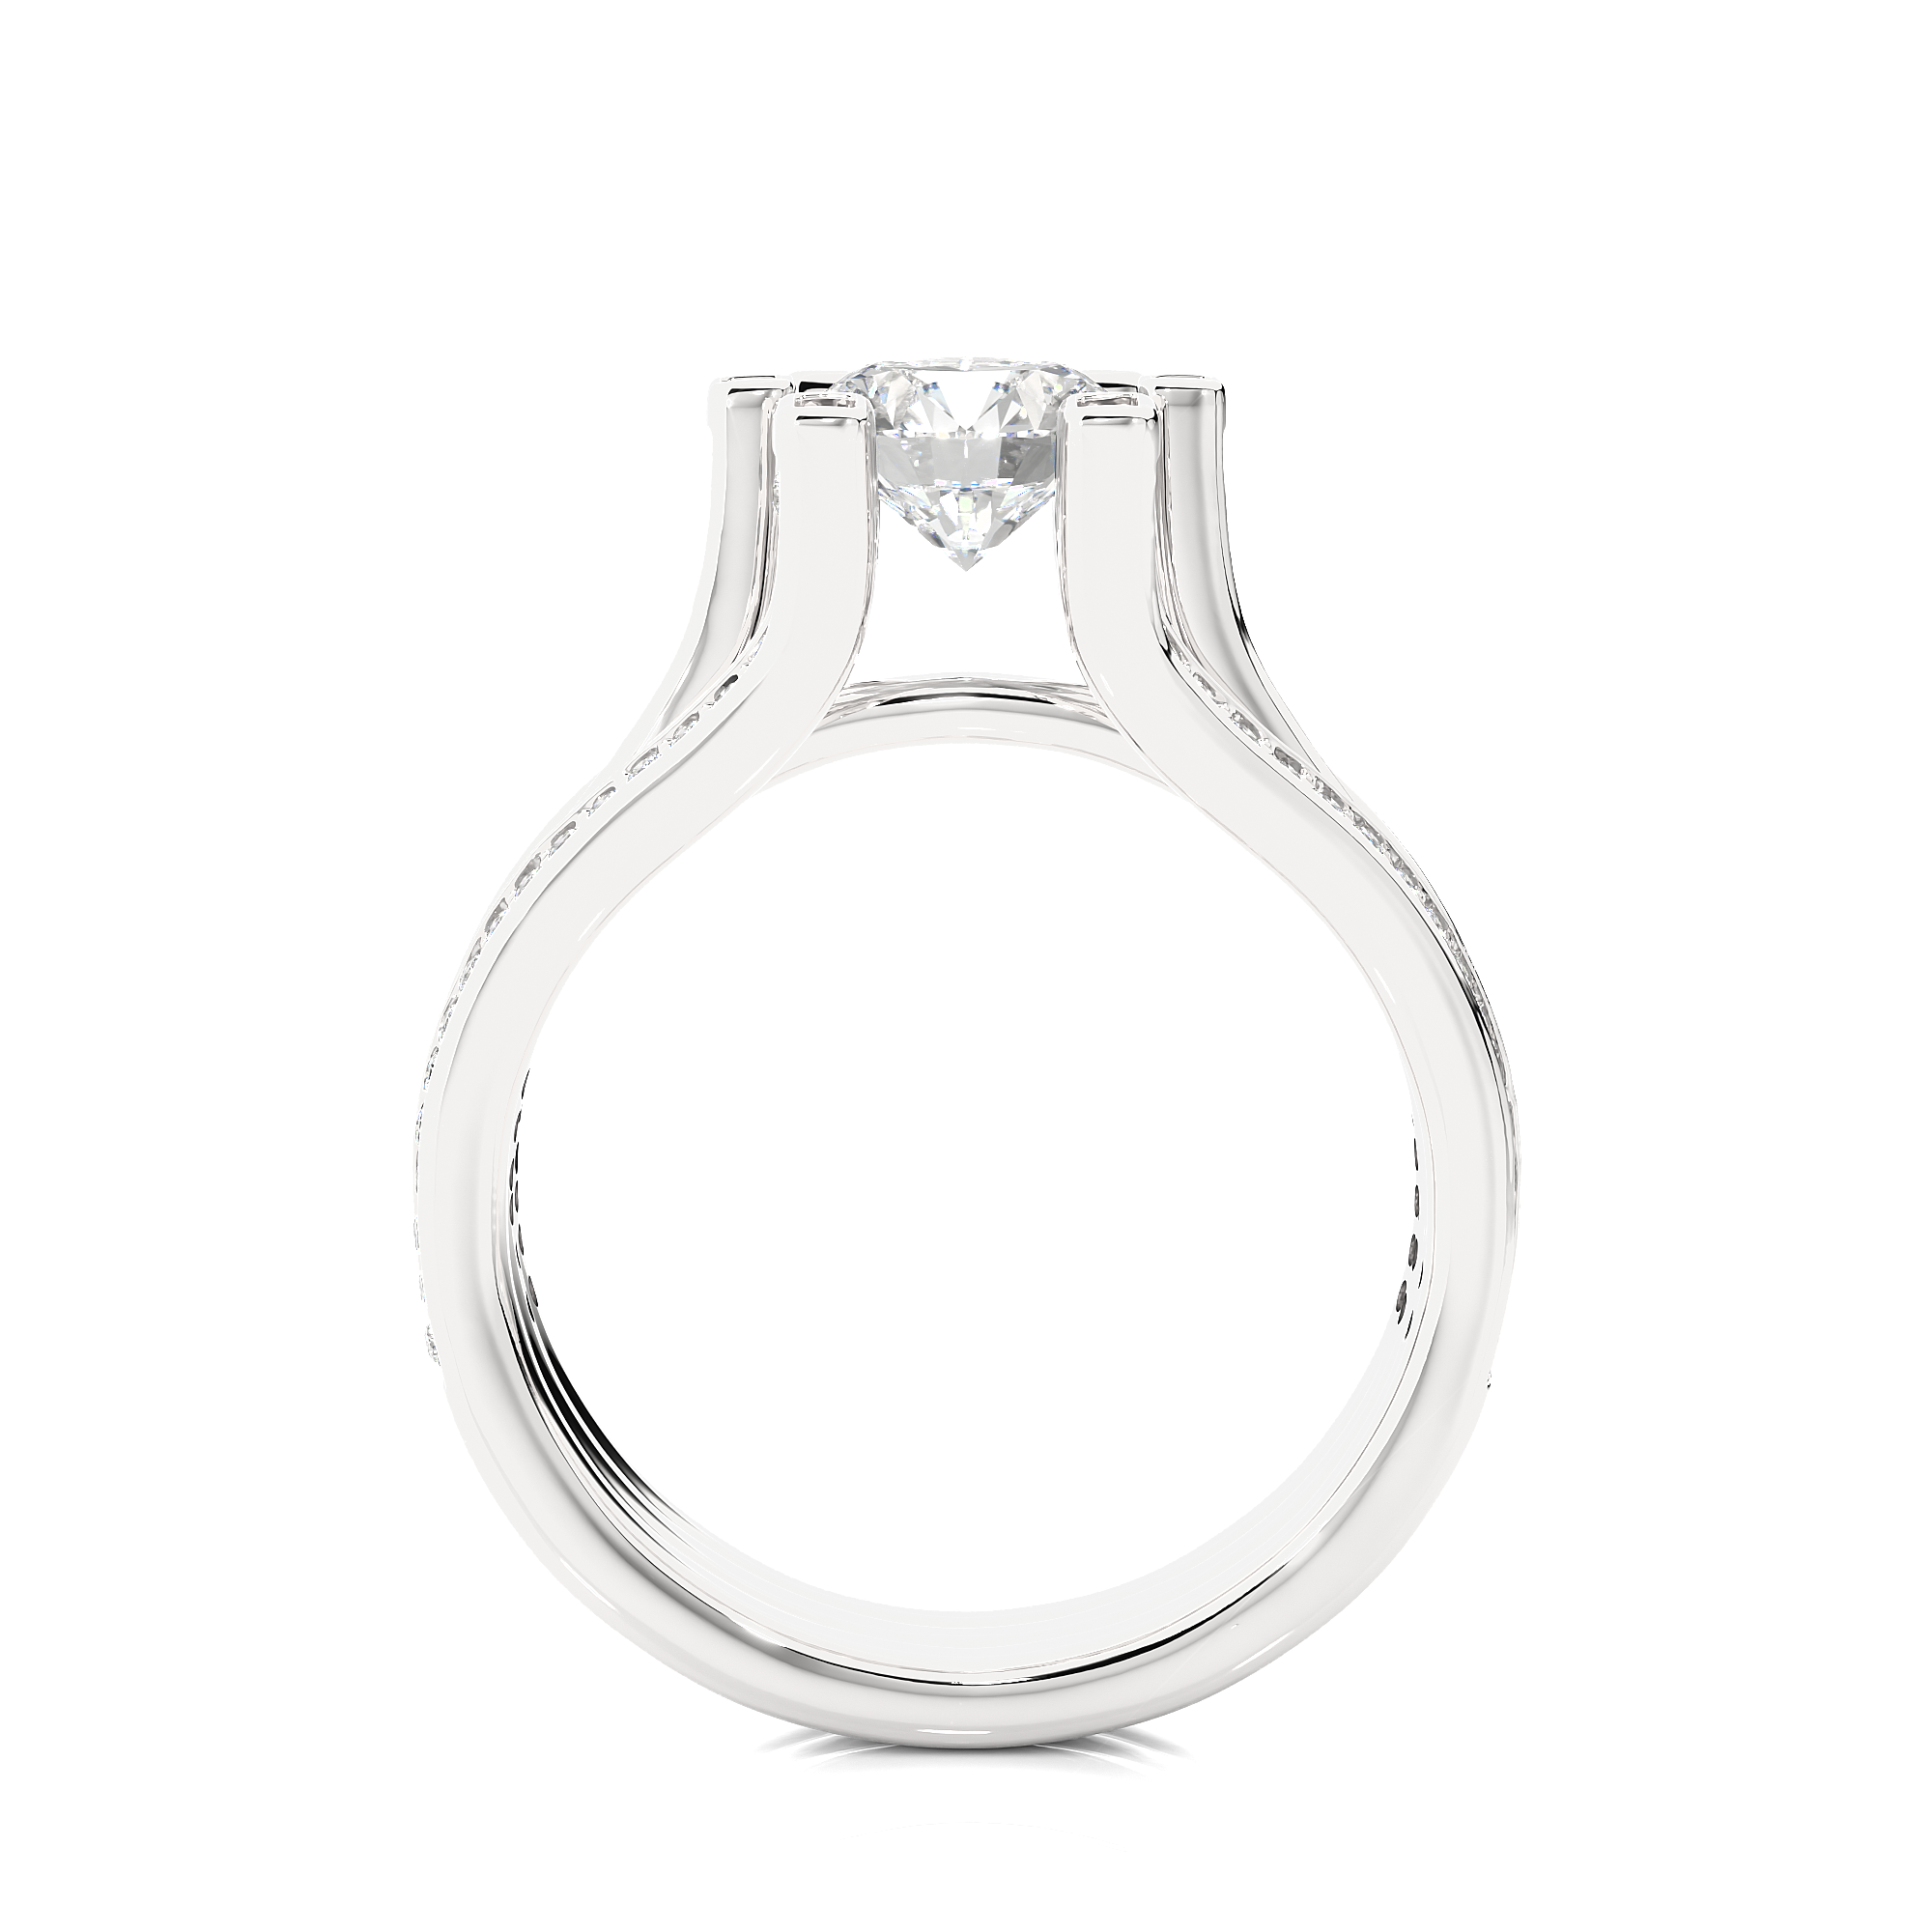 Amelia Ring - Solitaire Diamond Ring